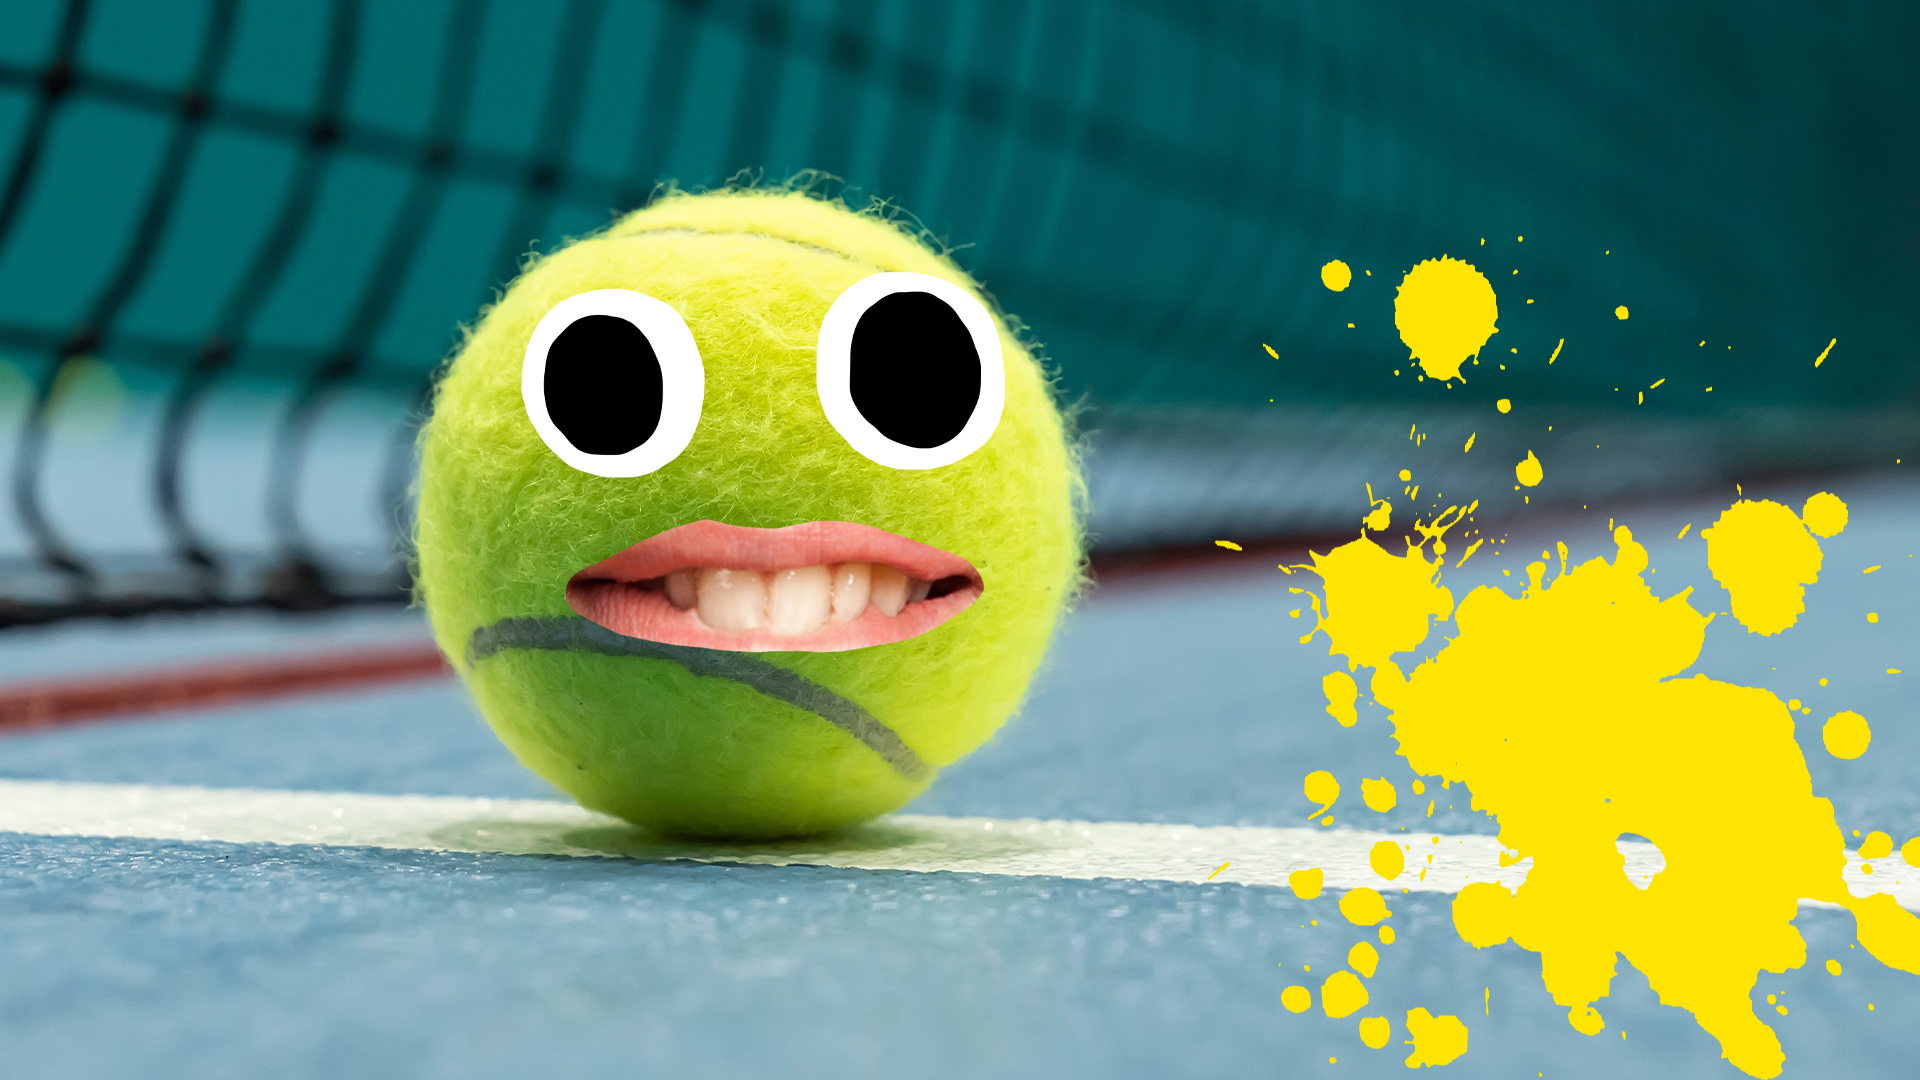 Goofy tennis ball with splats